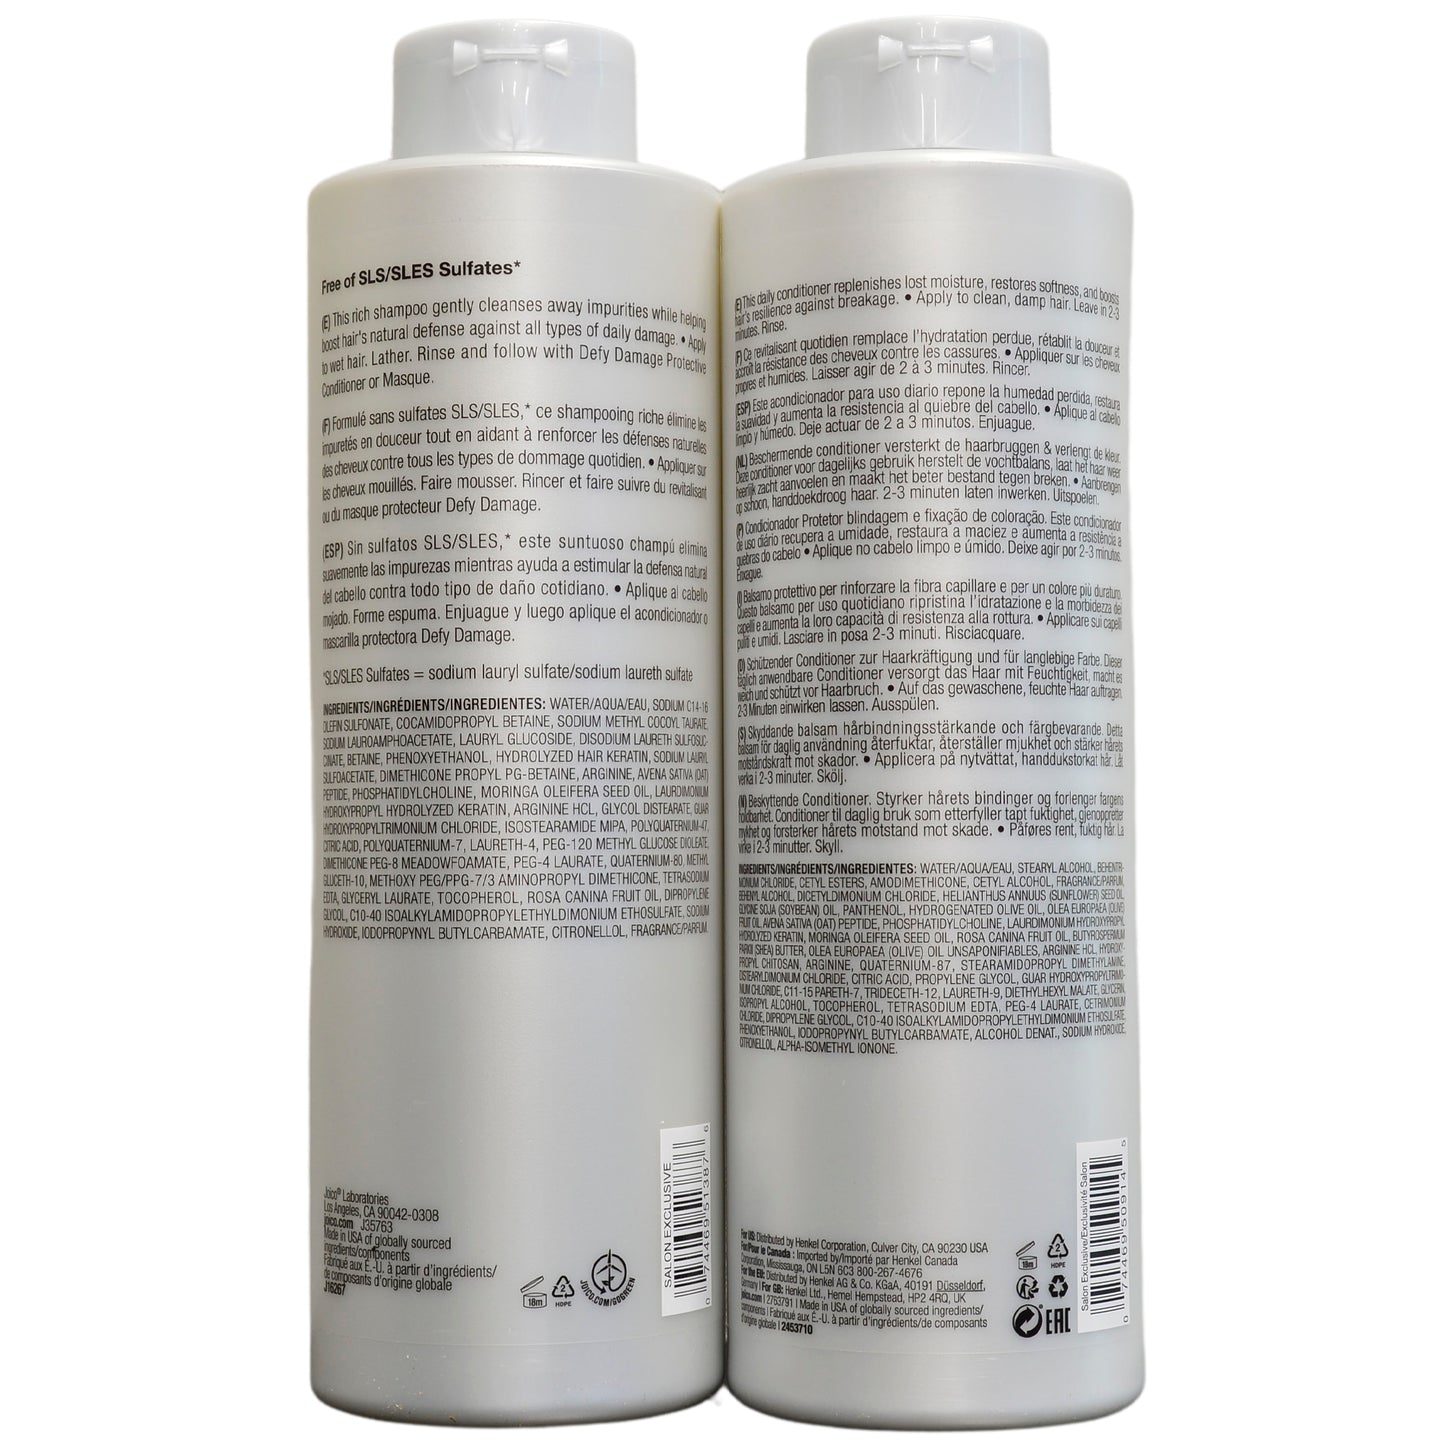 Joico Defy Damage Shampoo & Conditioner 33.8 oz Duo